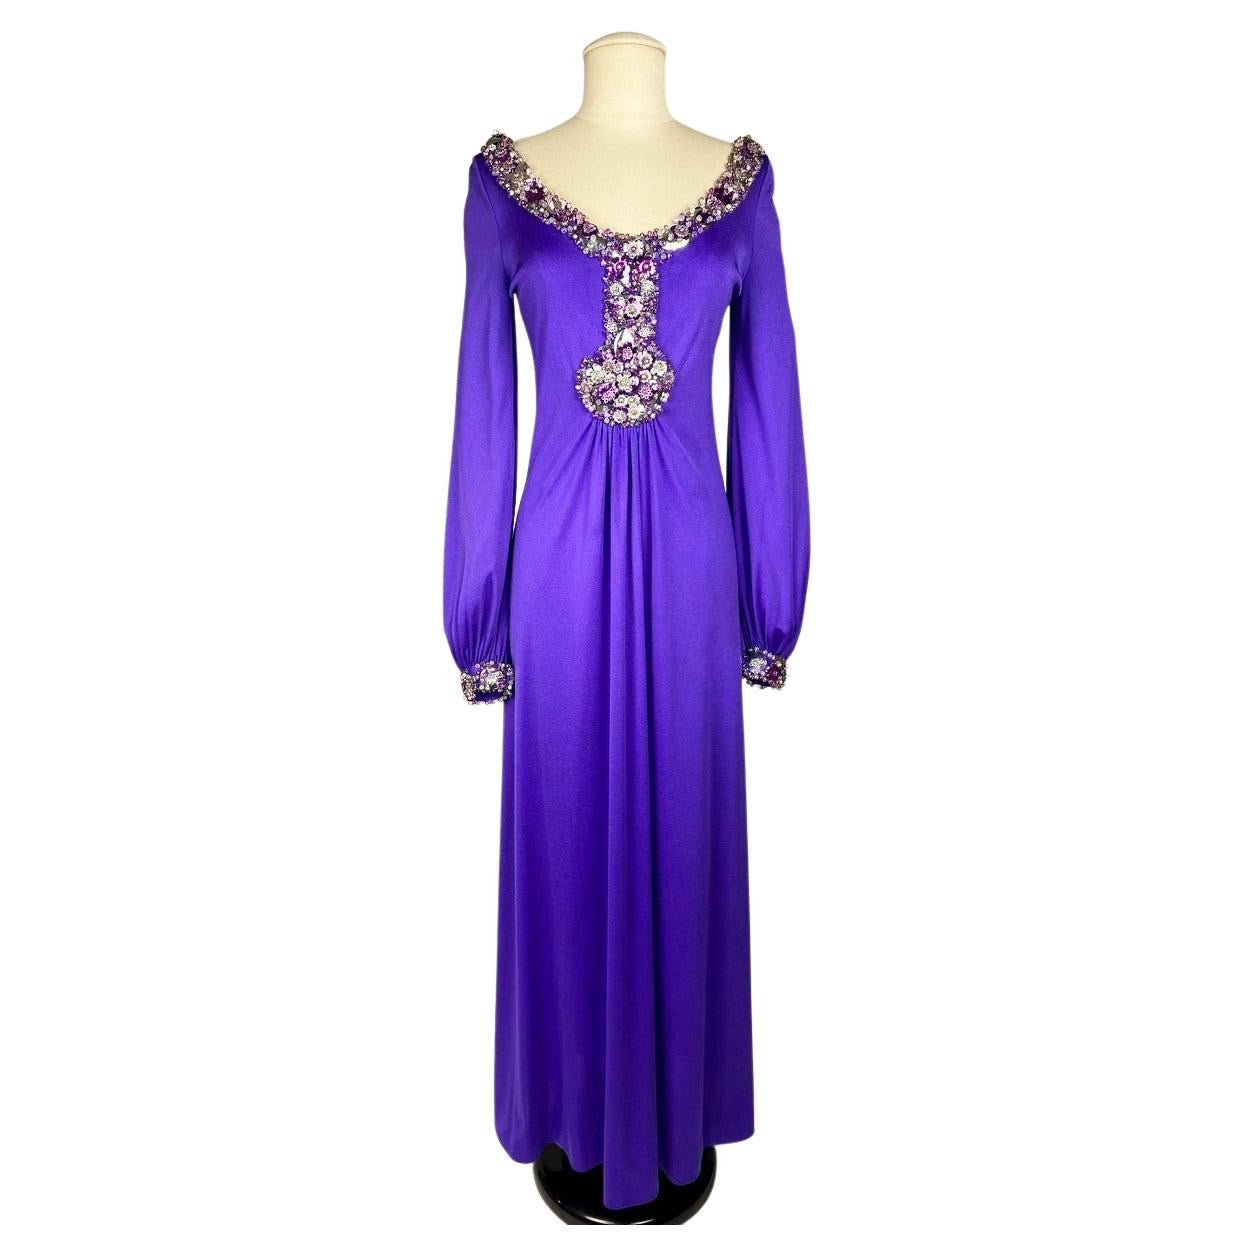 A Loris Azzaro Couture Purple Jewellery Evening Dress Circa 1970-1975